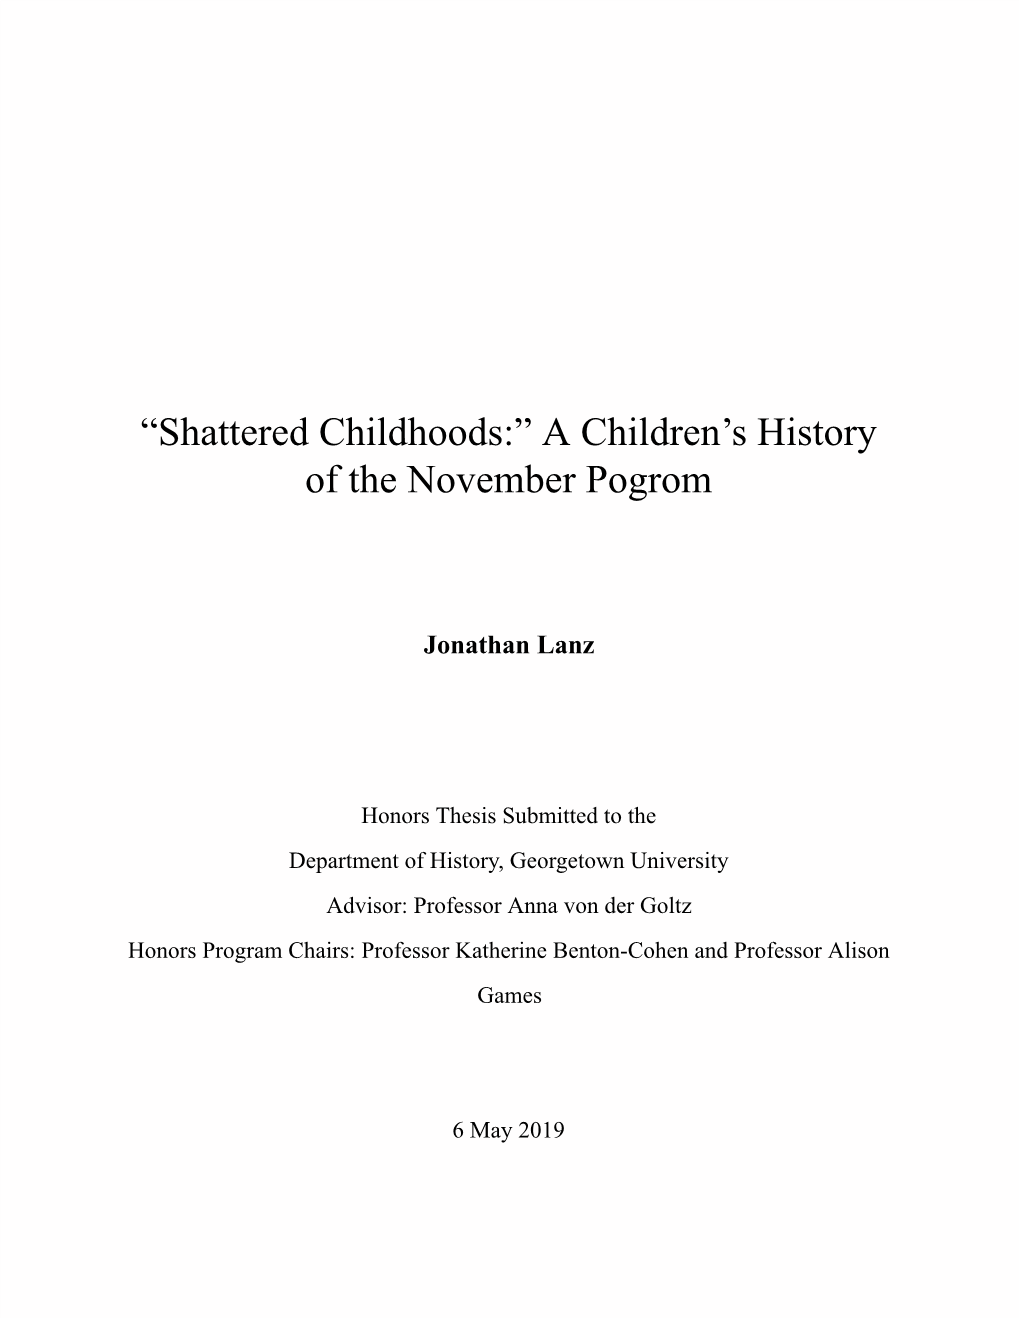 A Children's History of the November Pogrom